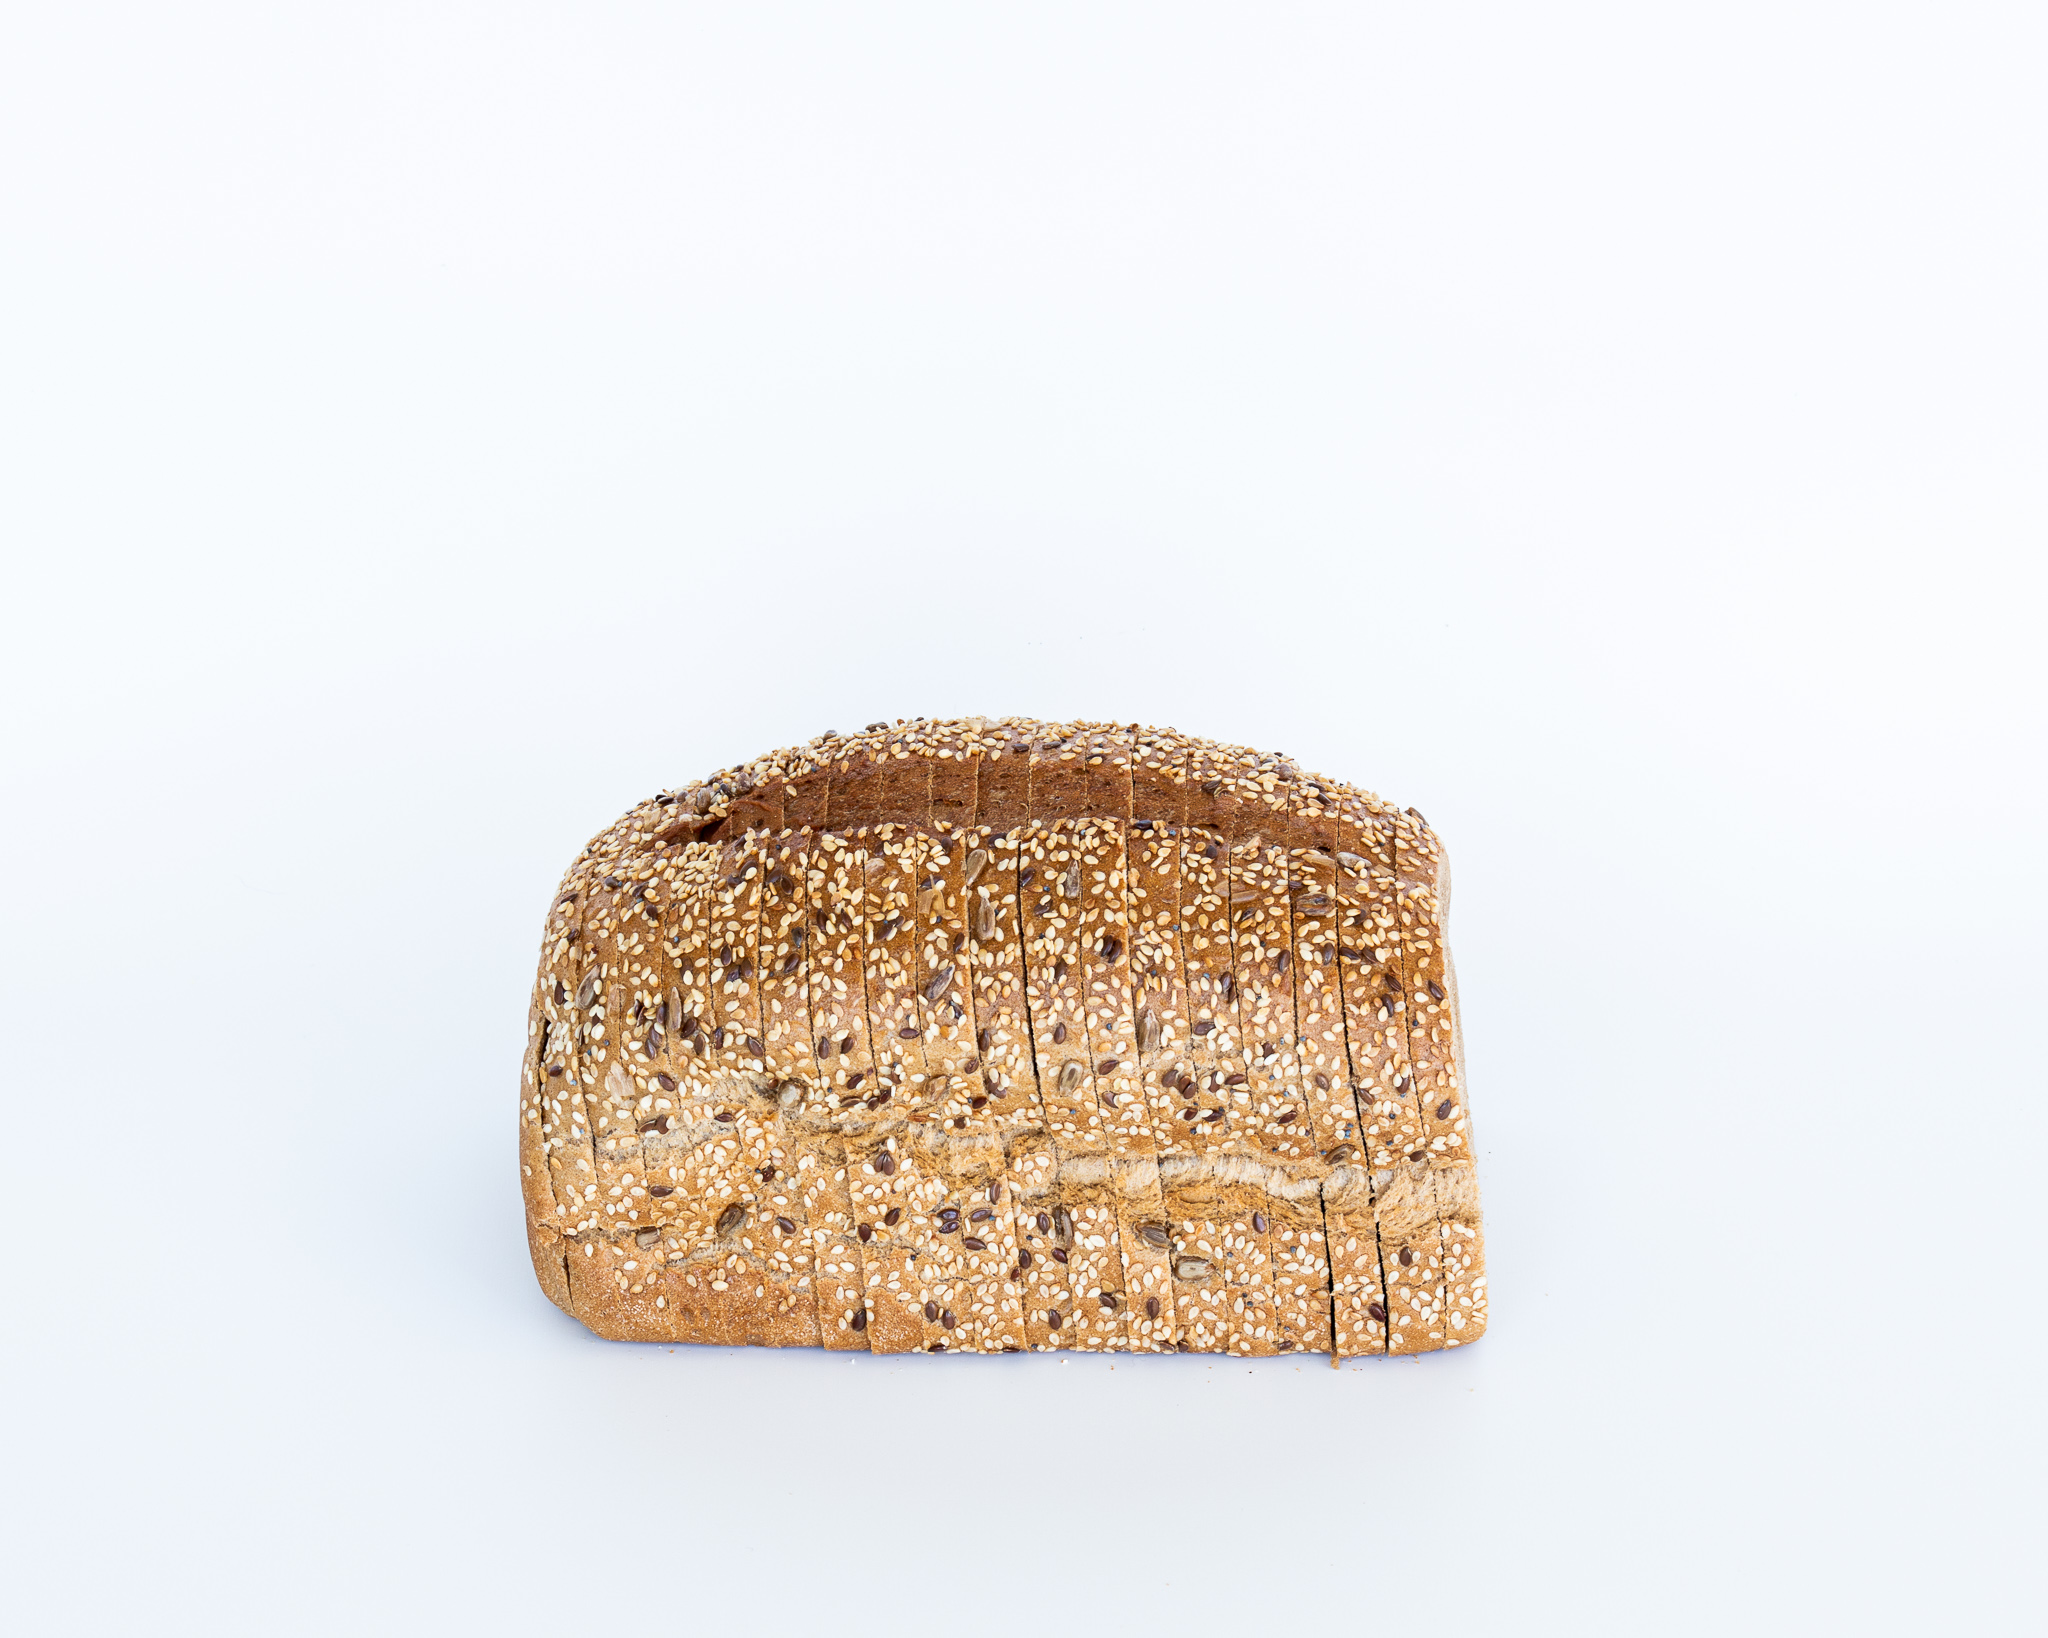 50% Rye Bread Seeded 600g